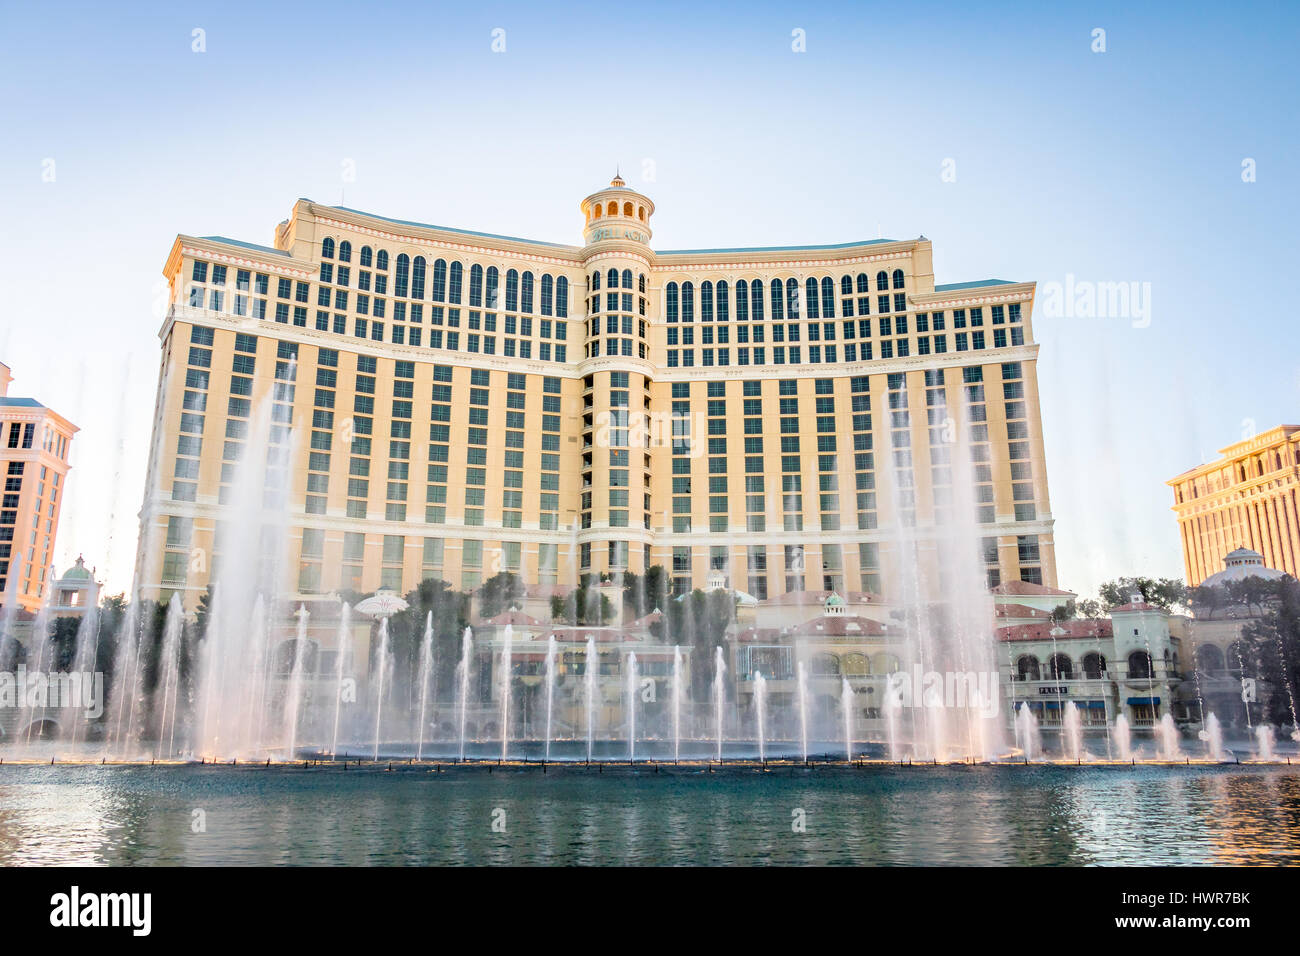 Dancing Fountains at Bellagio Hotel Casino - Las Vegas, Nevada, USA Stock Photo